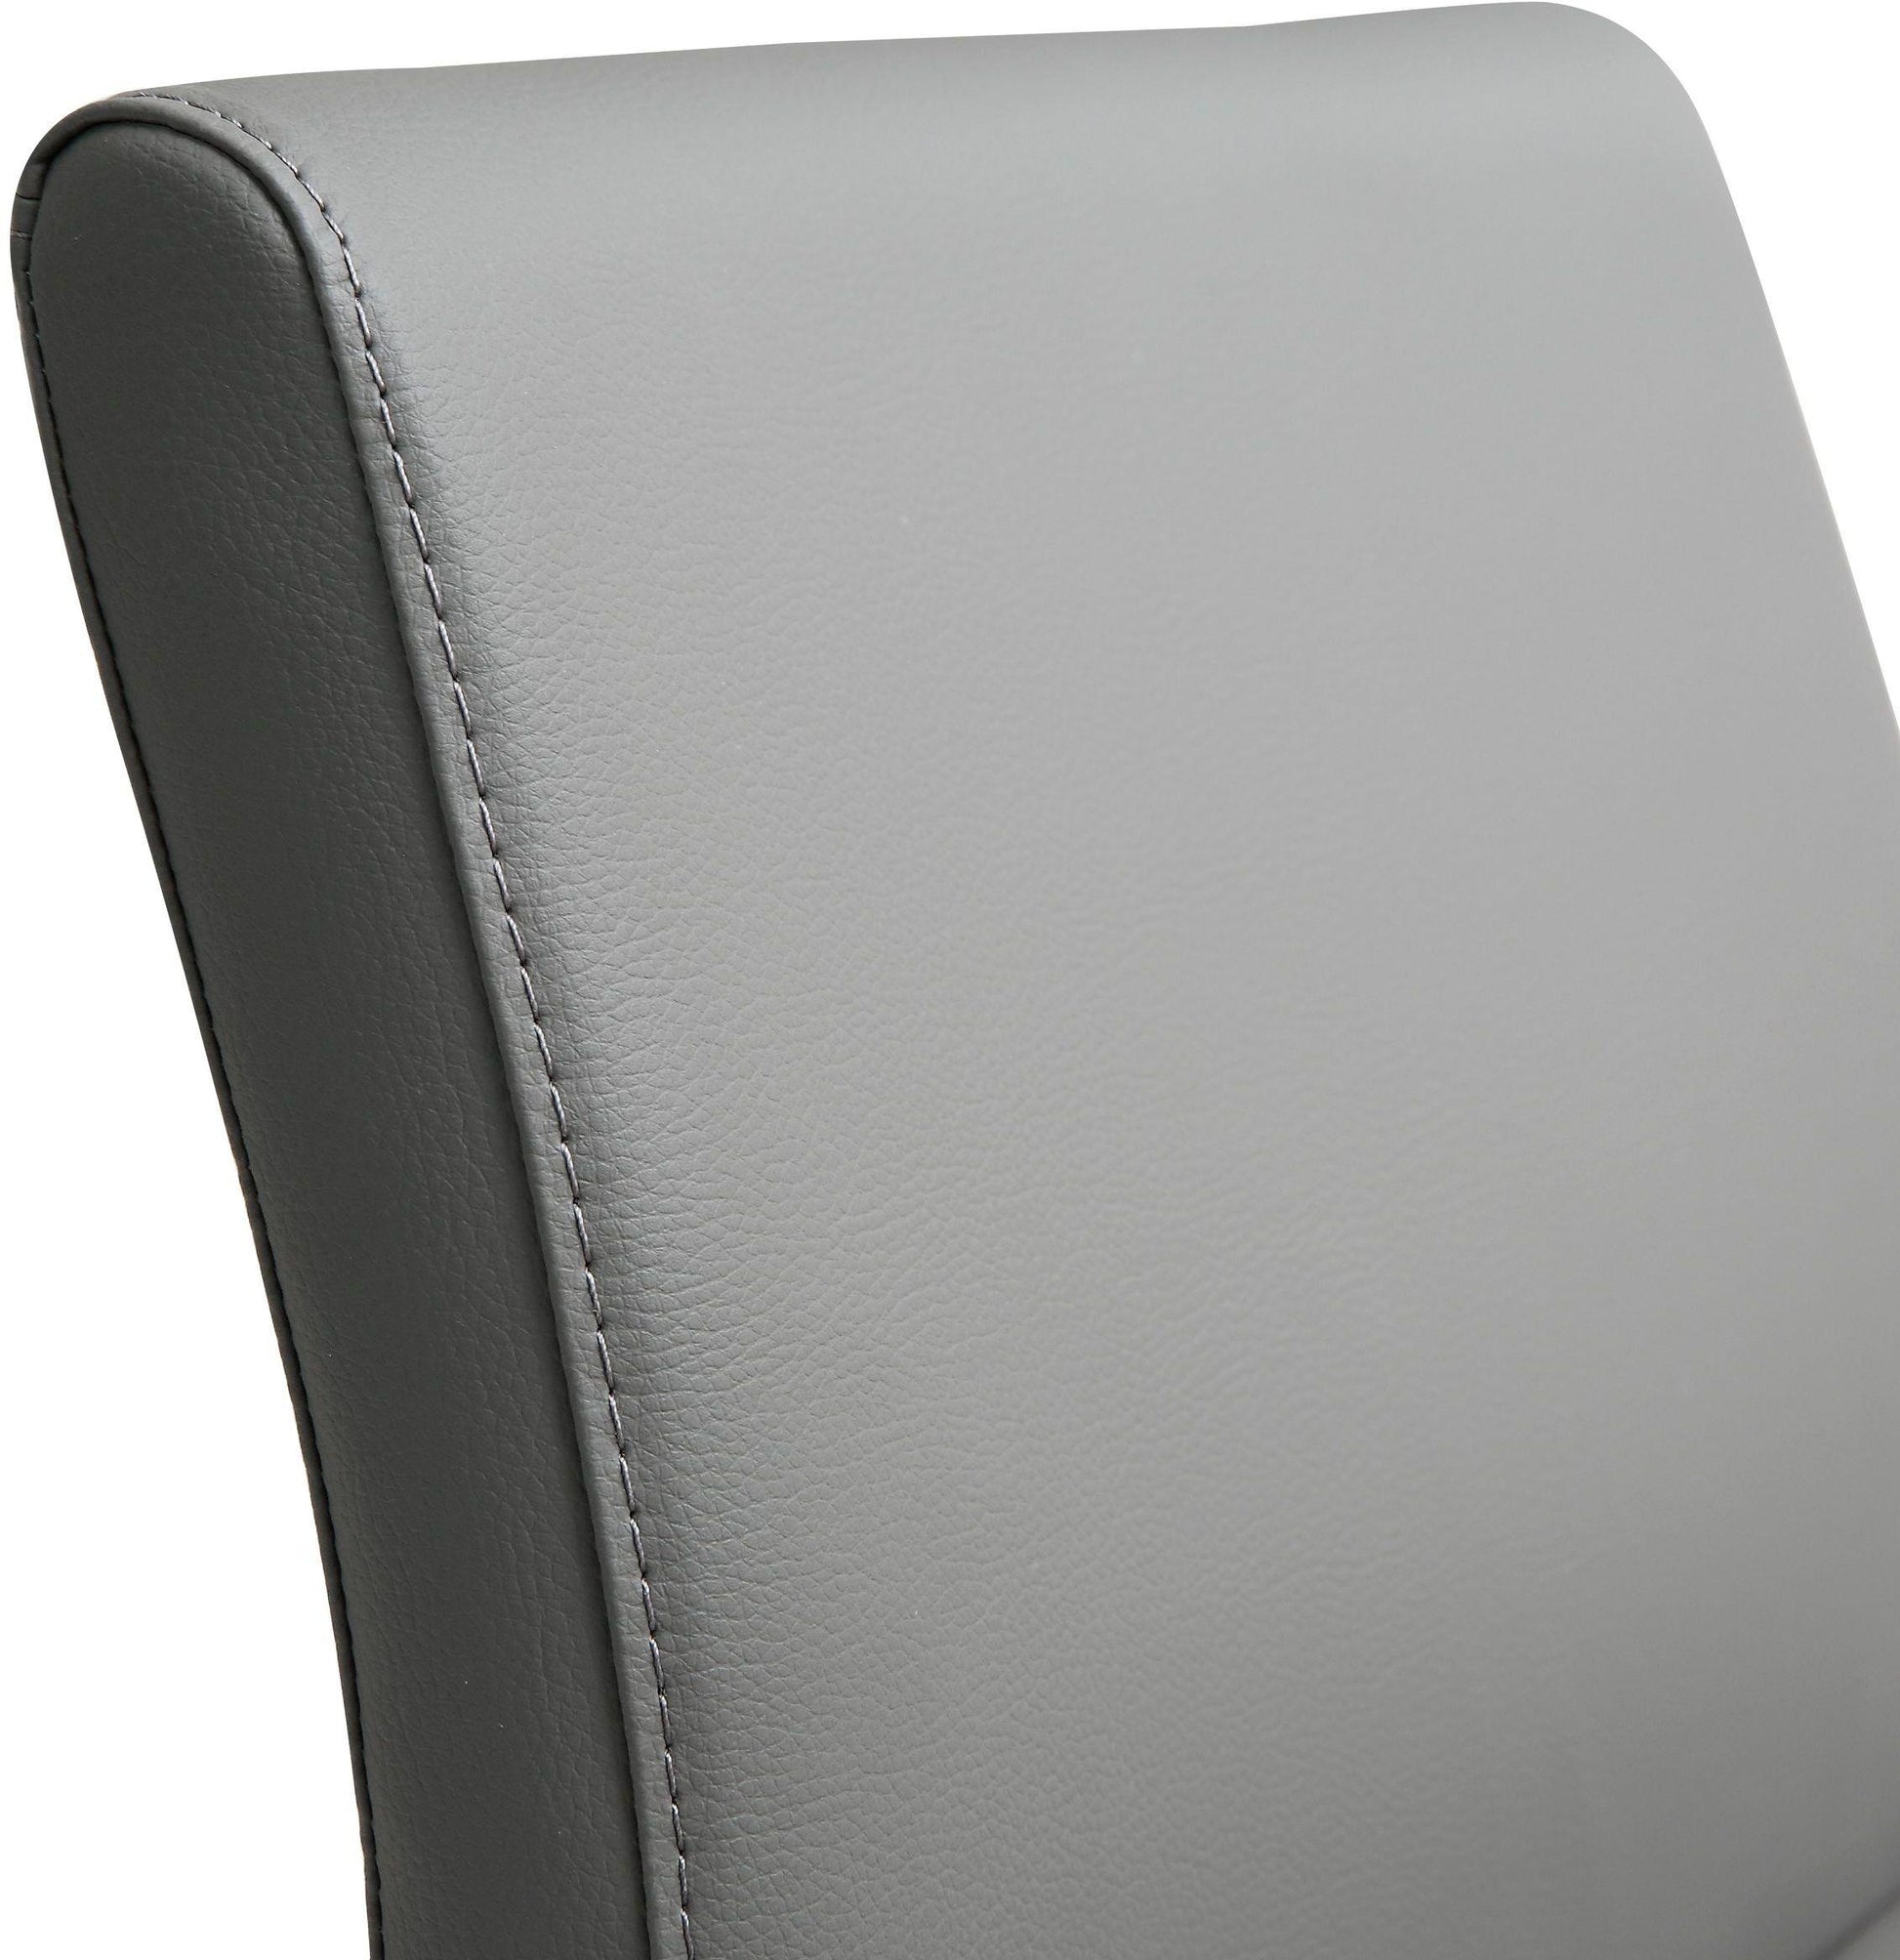 Denmark Vegan Leather Stool with TOV – Silver Base Set of Furniture 2 